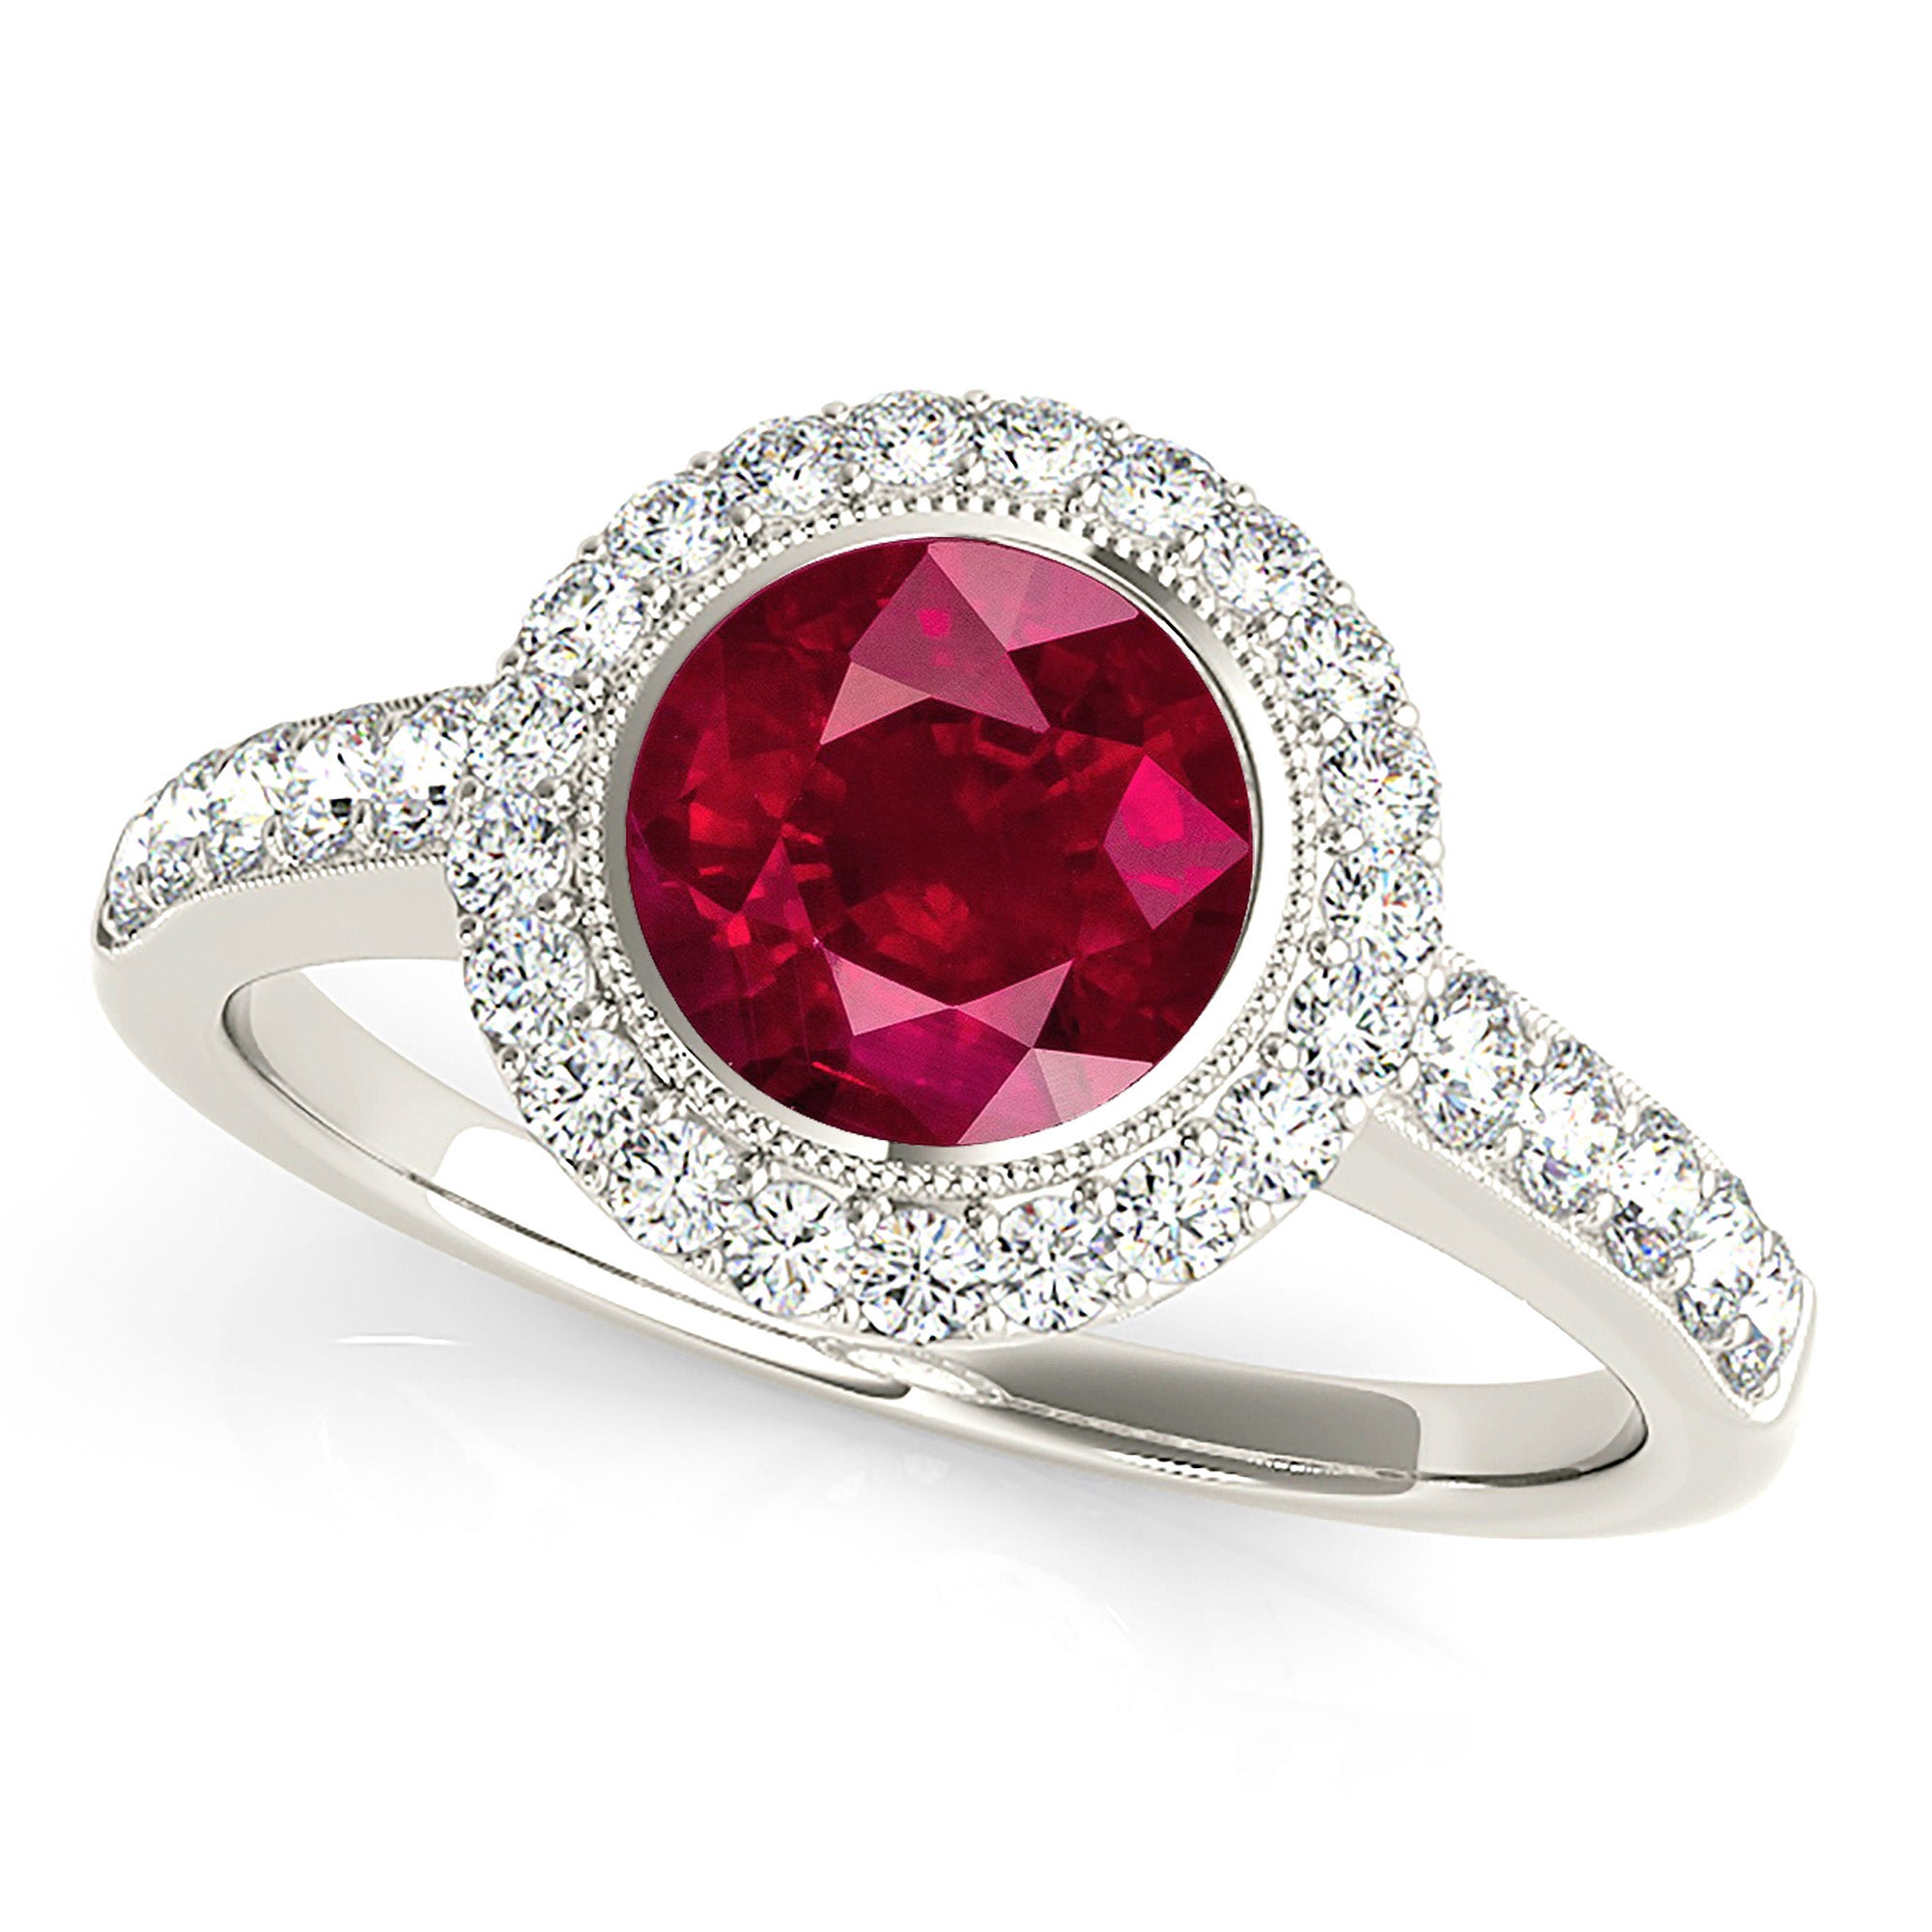 1.35 ct. Genuine Ruby Ring With 0.40 ctw. Diamond Milgrain Halo And Delicate Diamond Band-in 14K/18K White, Yellow, Rose Gold and Platinum - Christmas Jewelry Gift -VIRABYANI